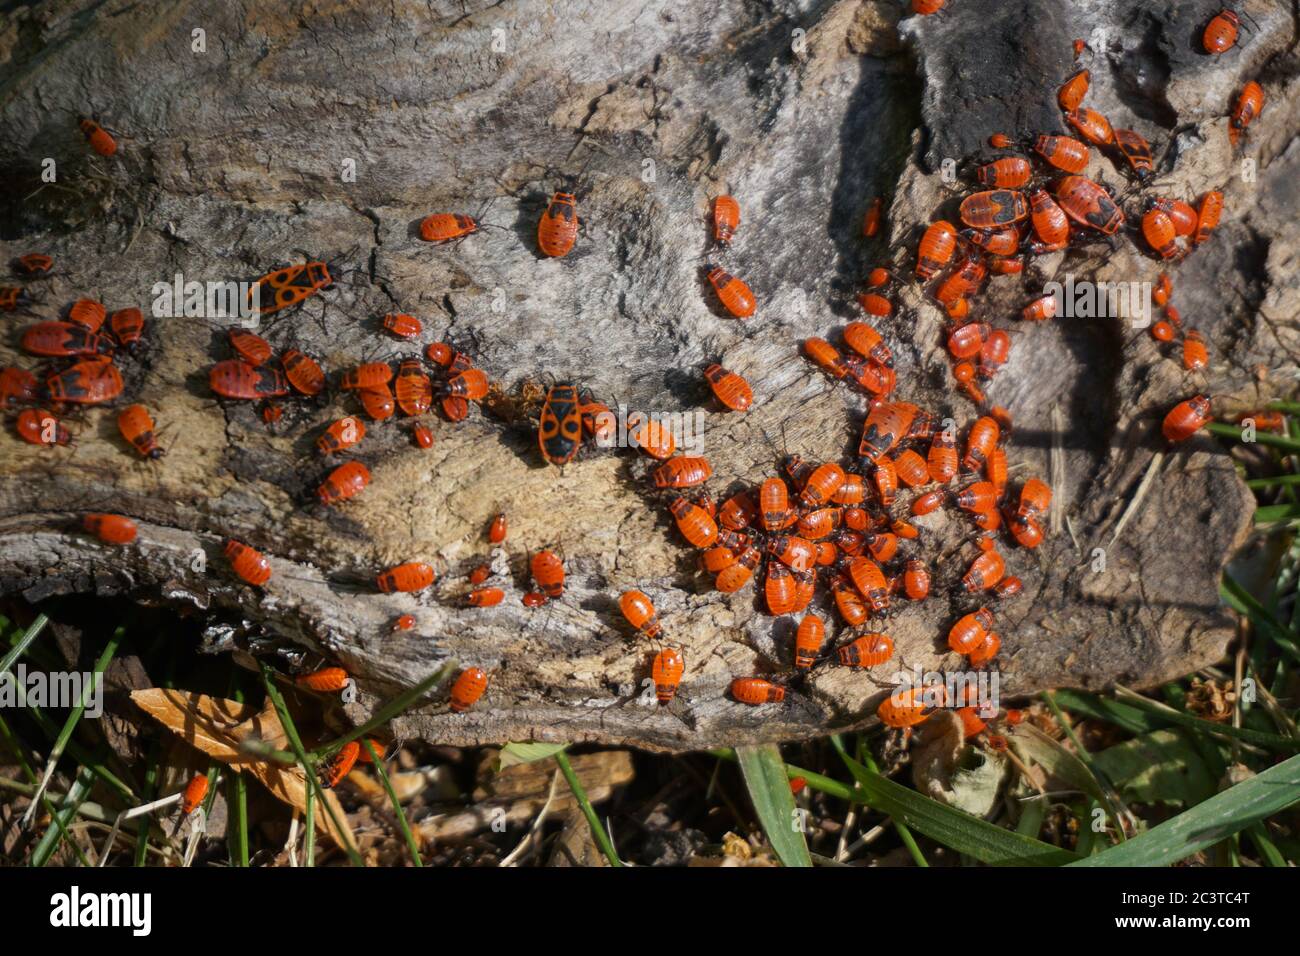 closeup of a nursery of young firebugs hiding on a tree stump Stock Photo